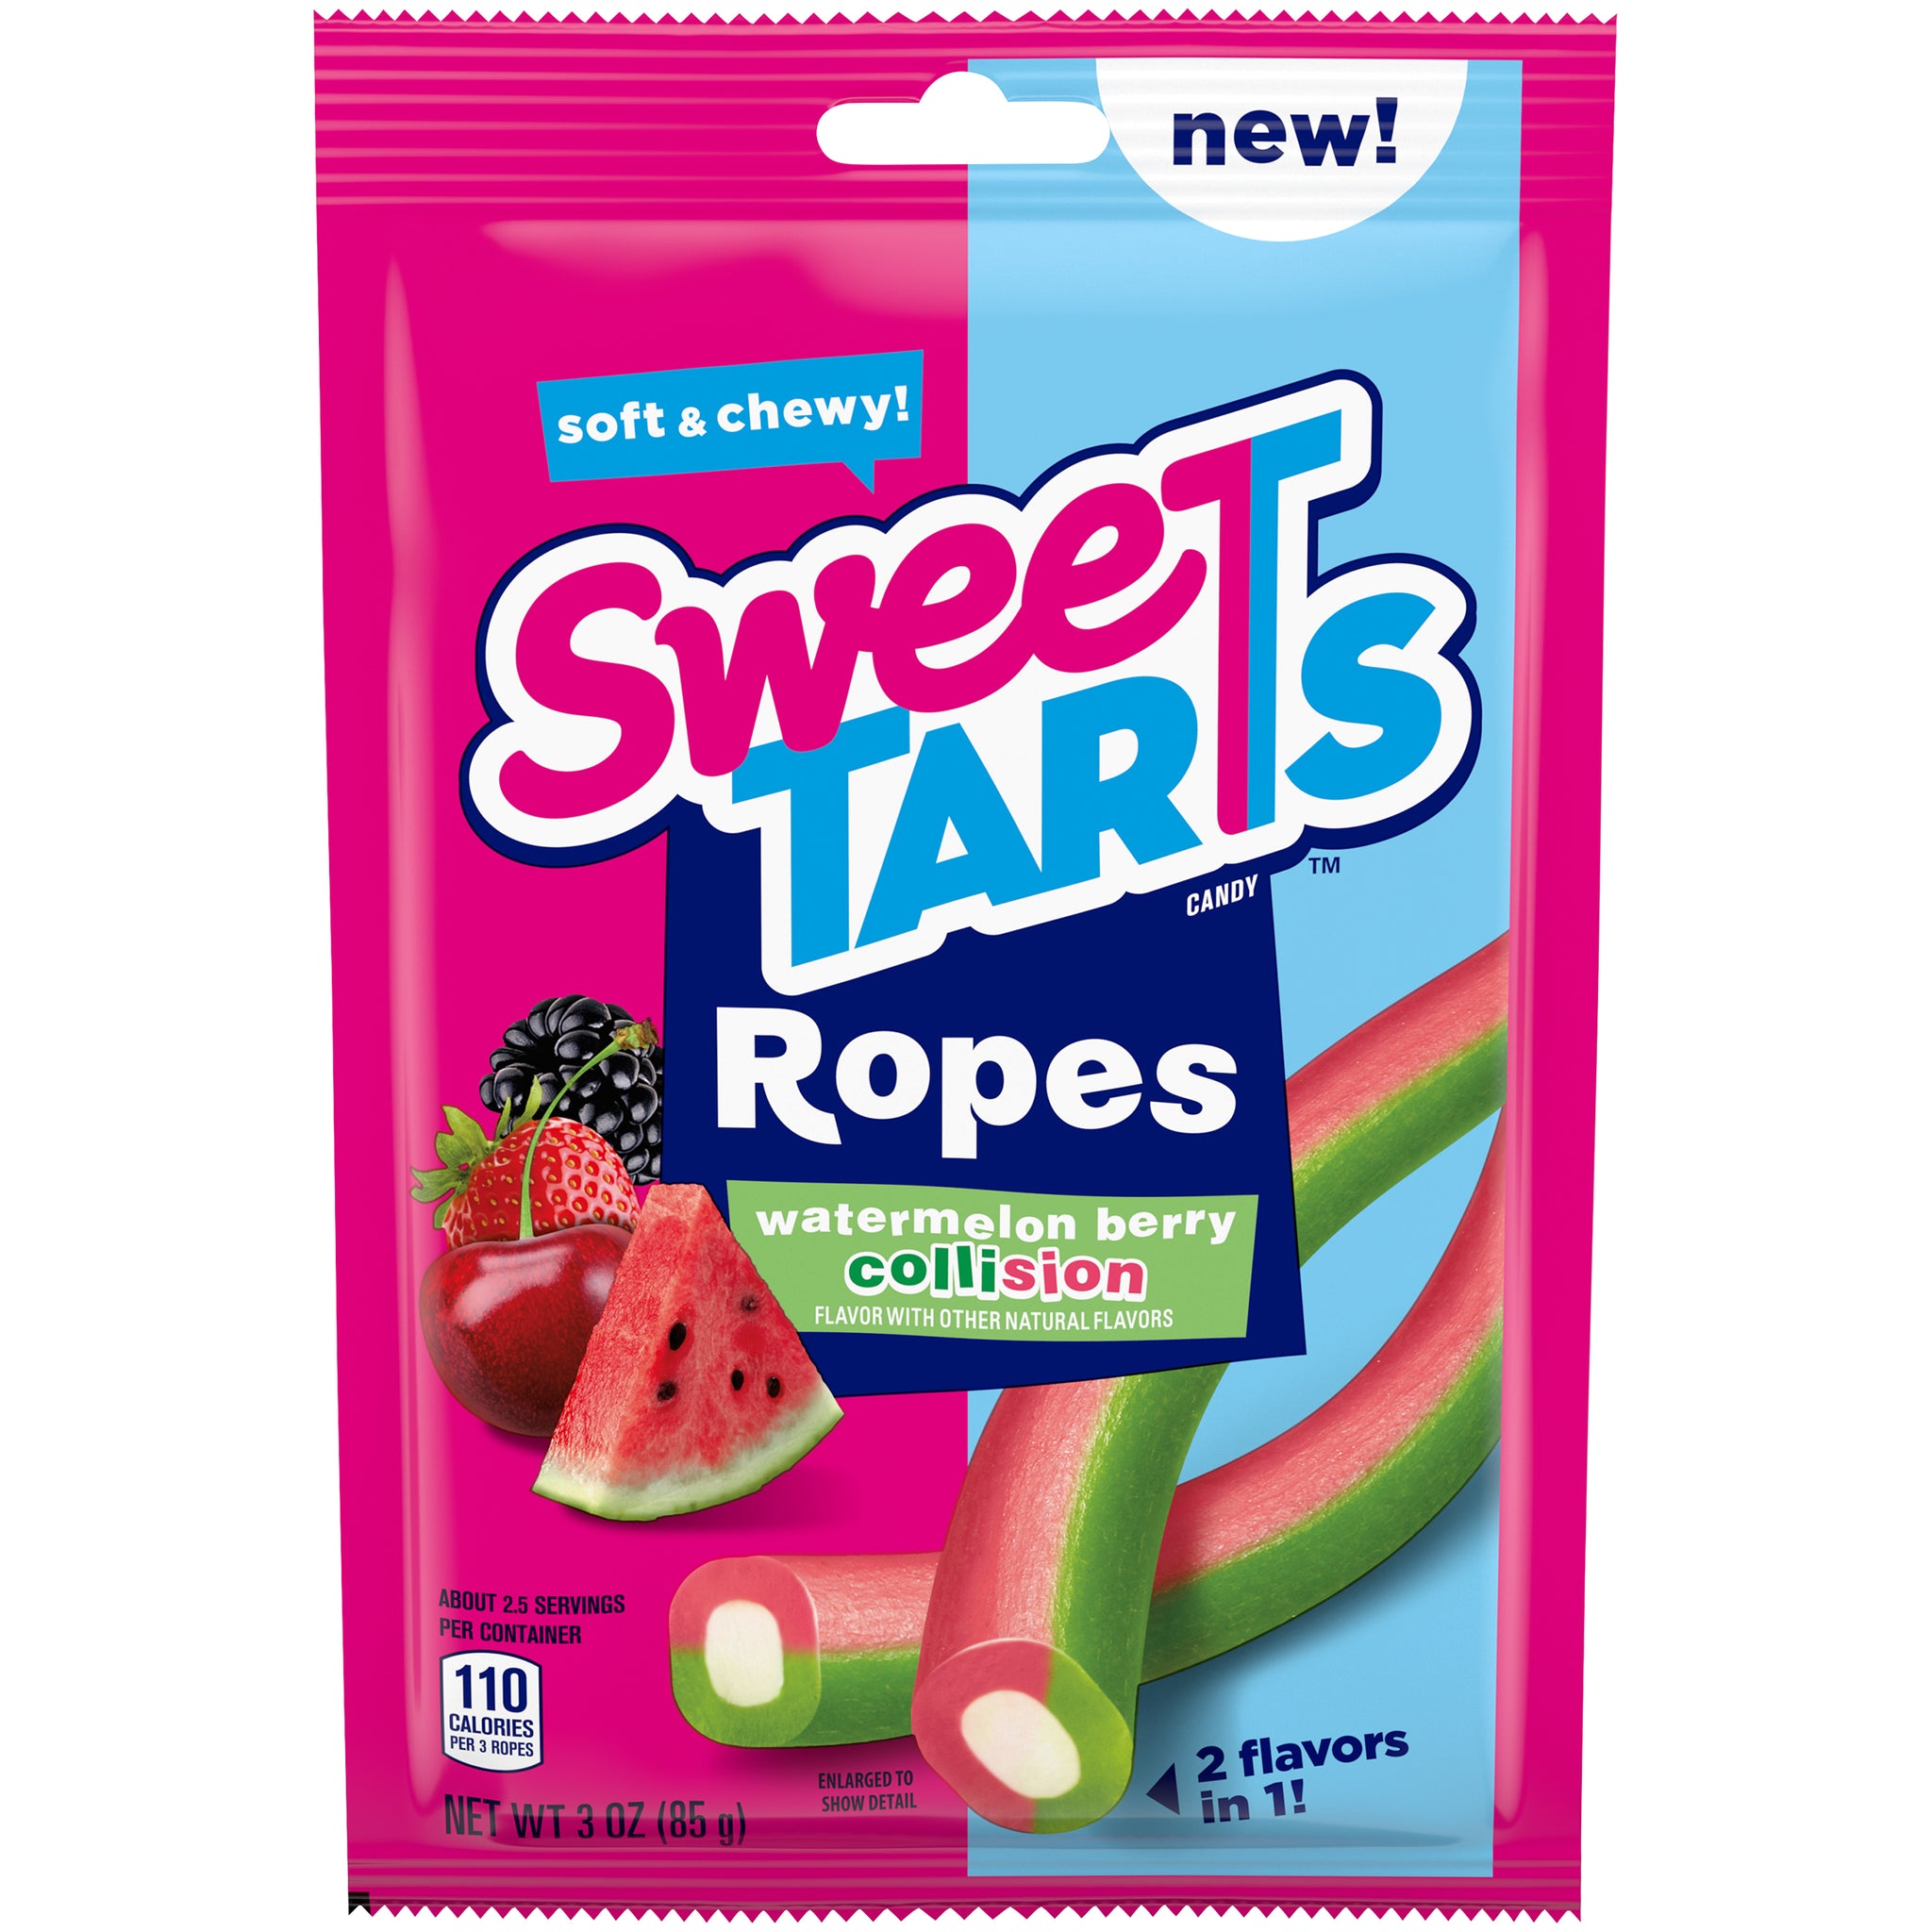 SweeTart Ropes Watermelon Berry Collision, 3oz